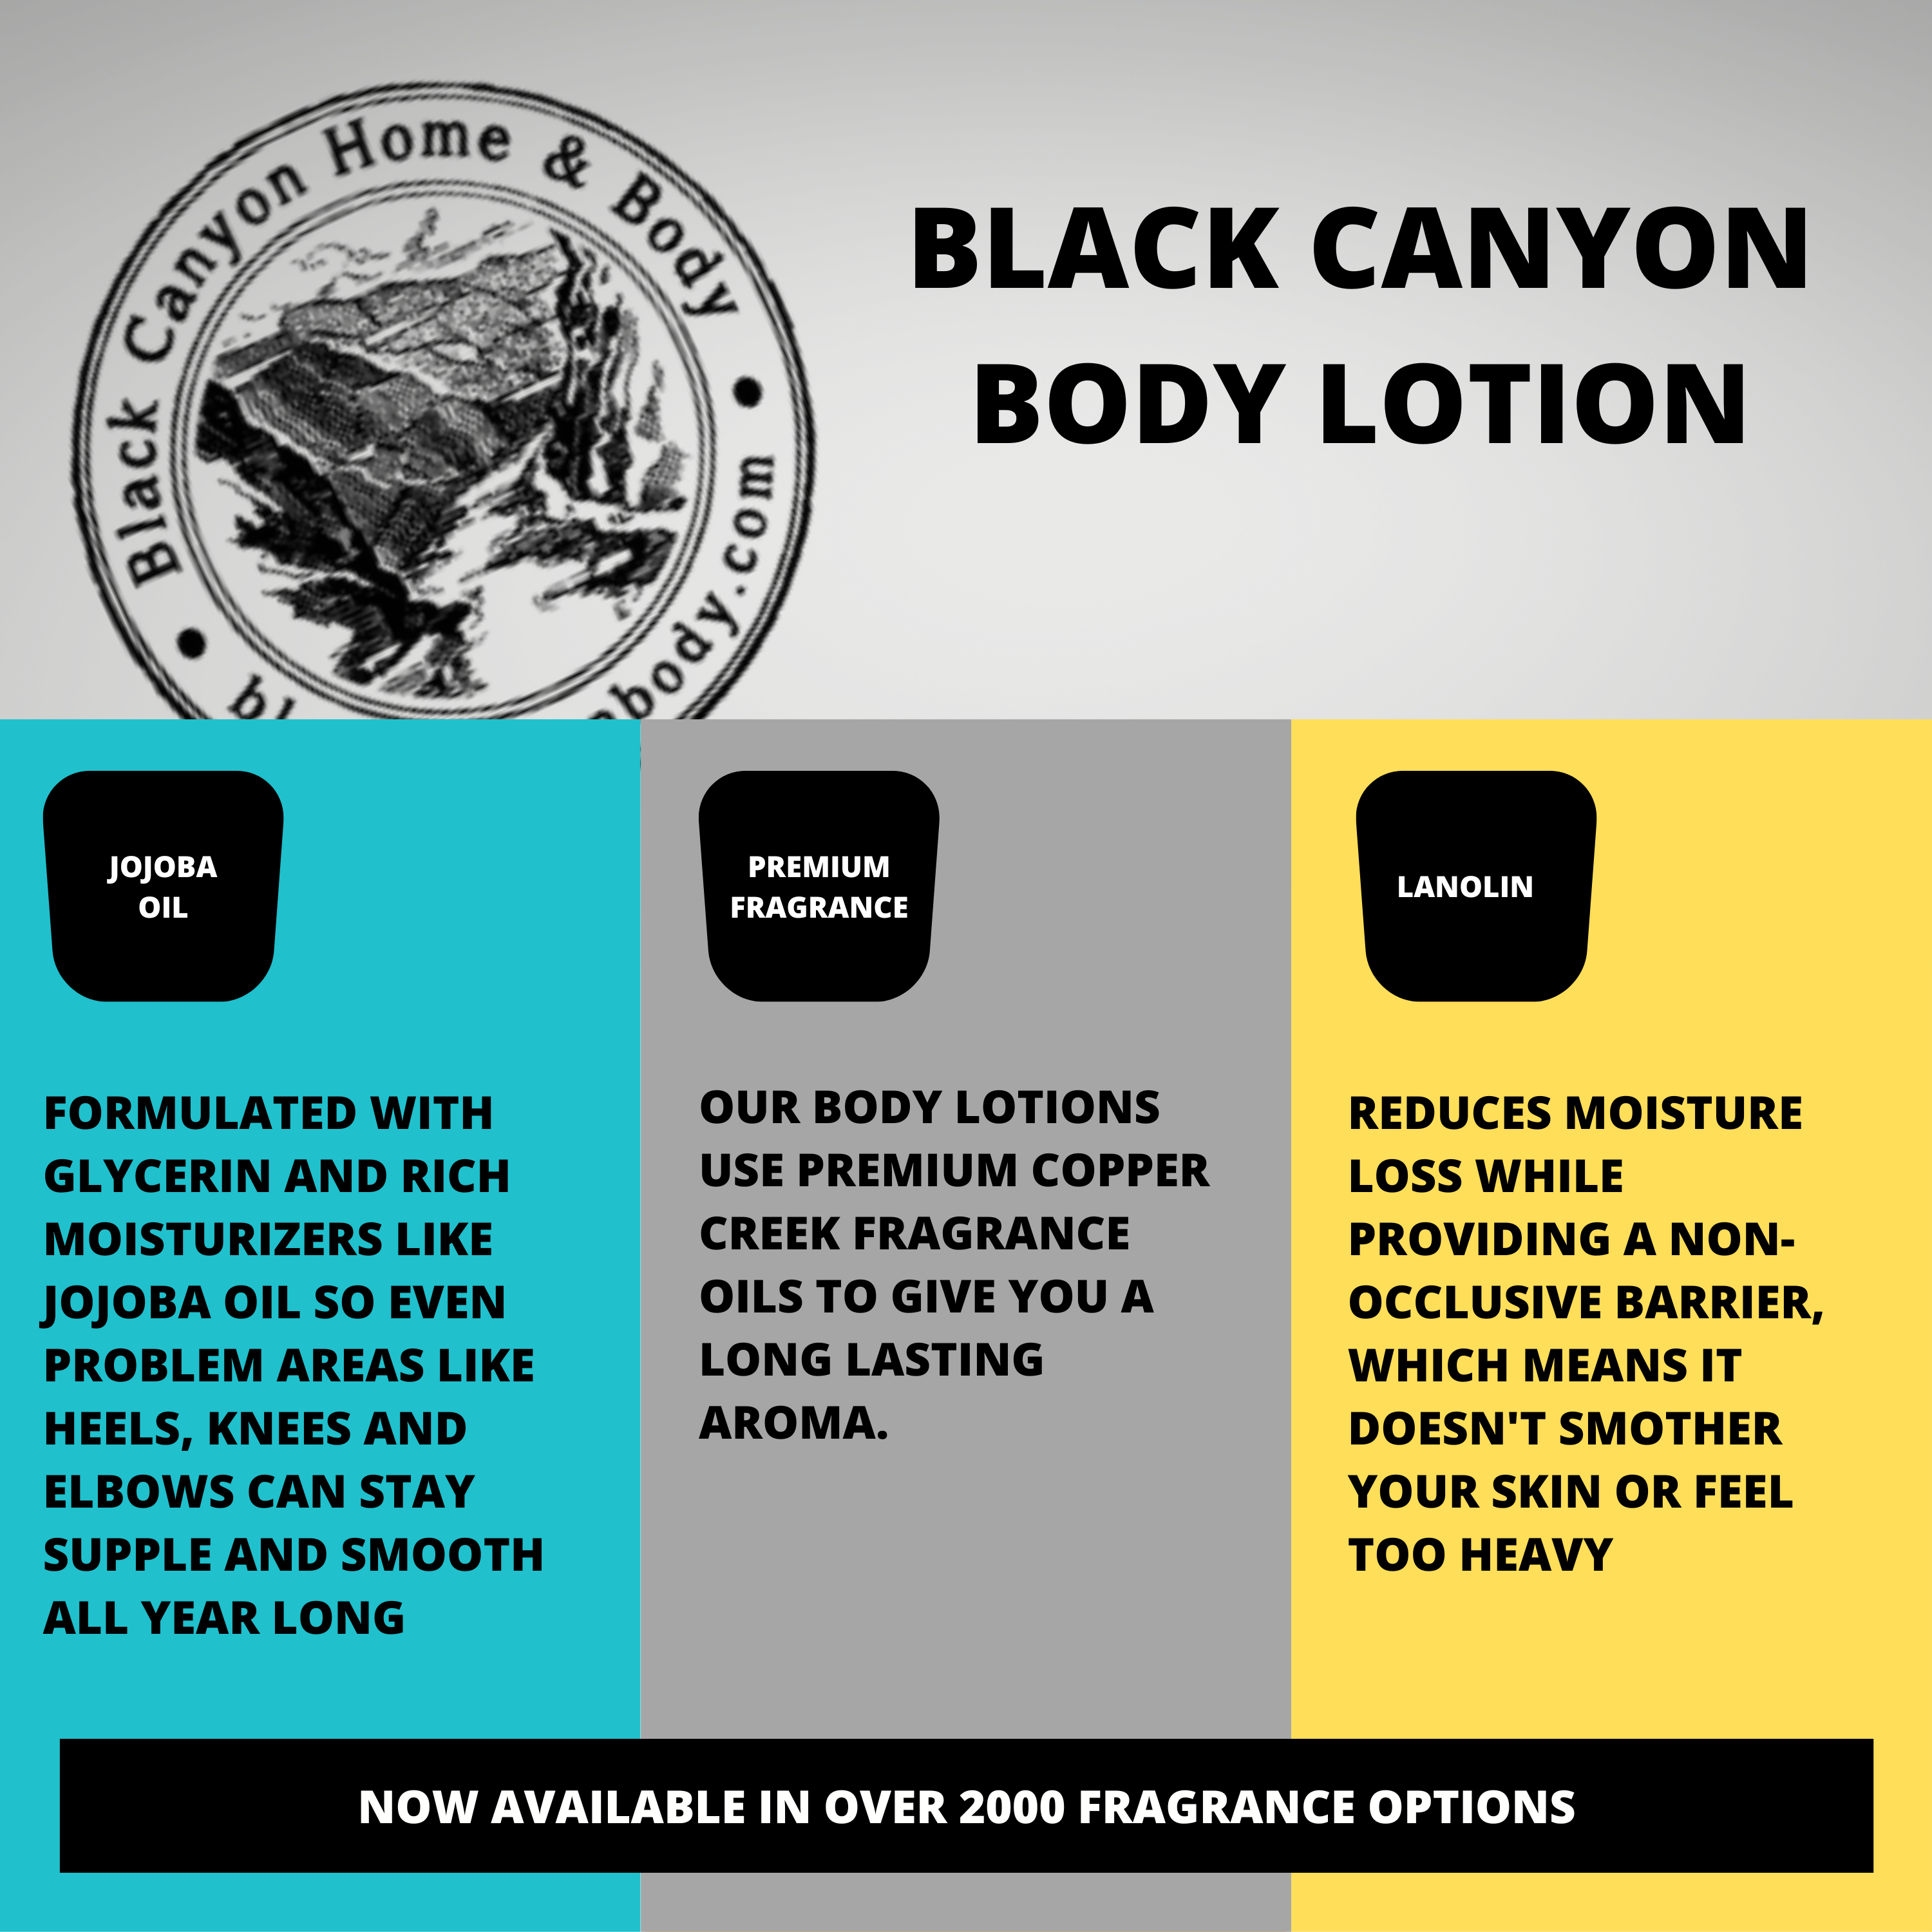 Black Canyon Lemon Freesia Scented Luxury Body Lotion with Lanolin and Jojoba Oil